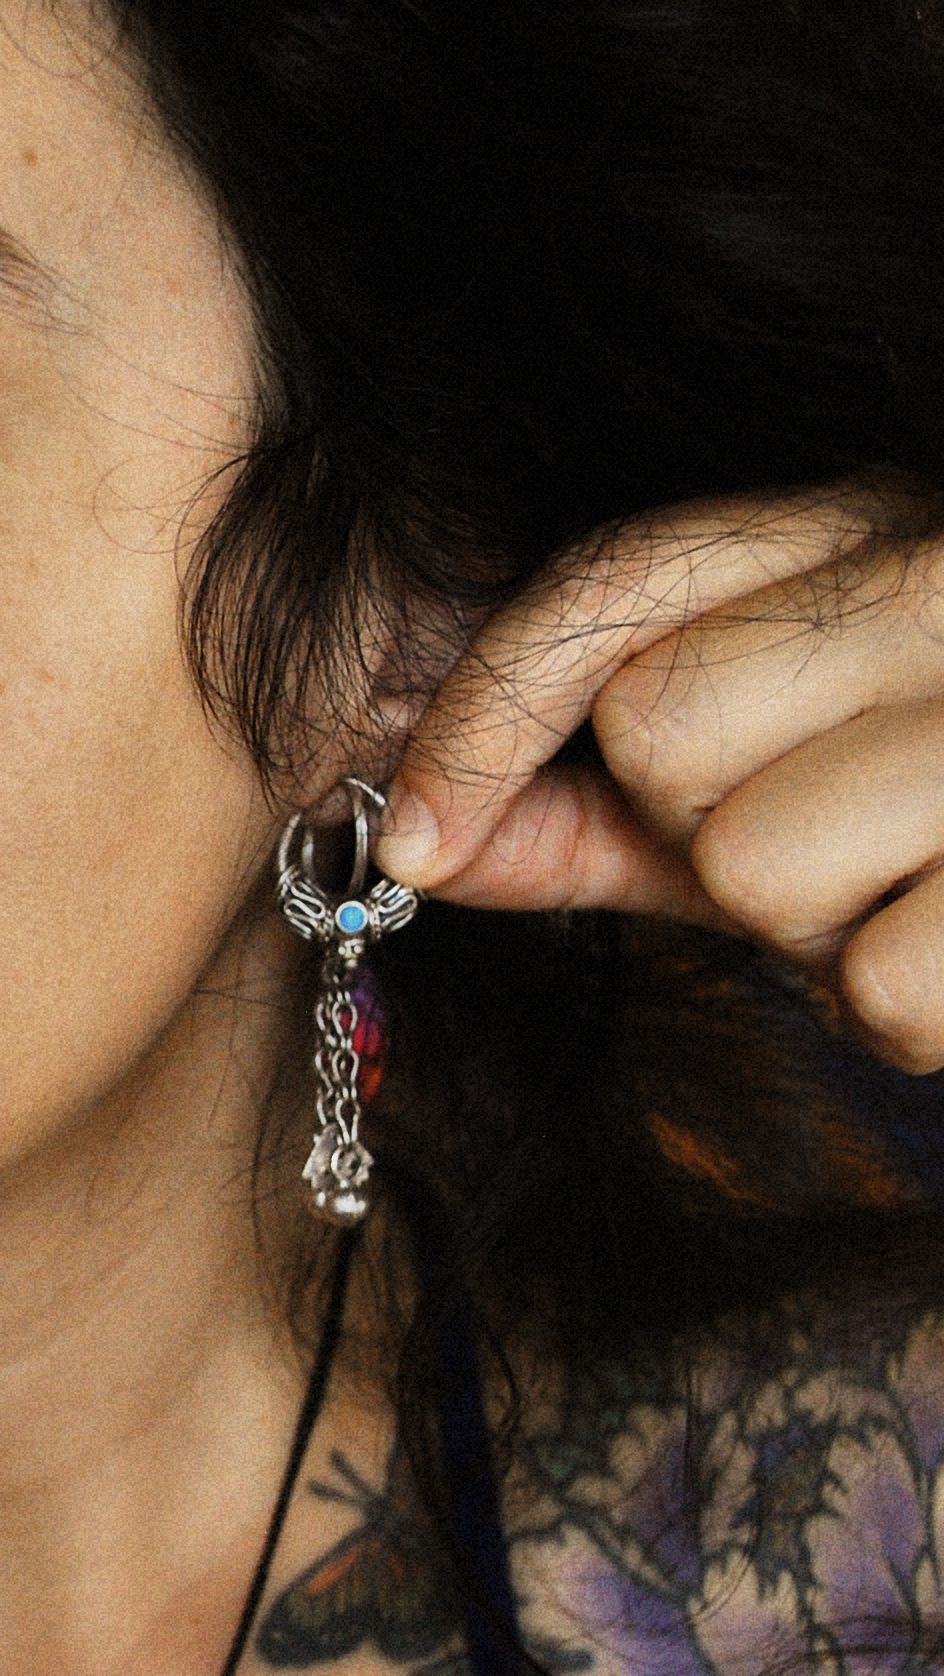 Bali Hoop Earrings with Turquoise - Small